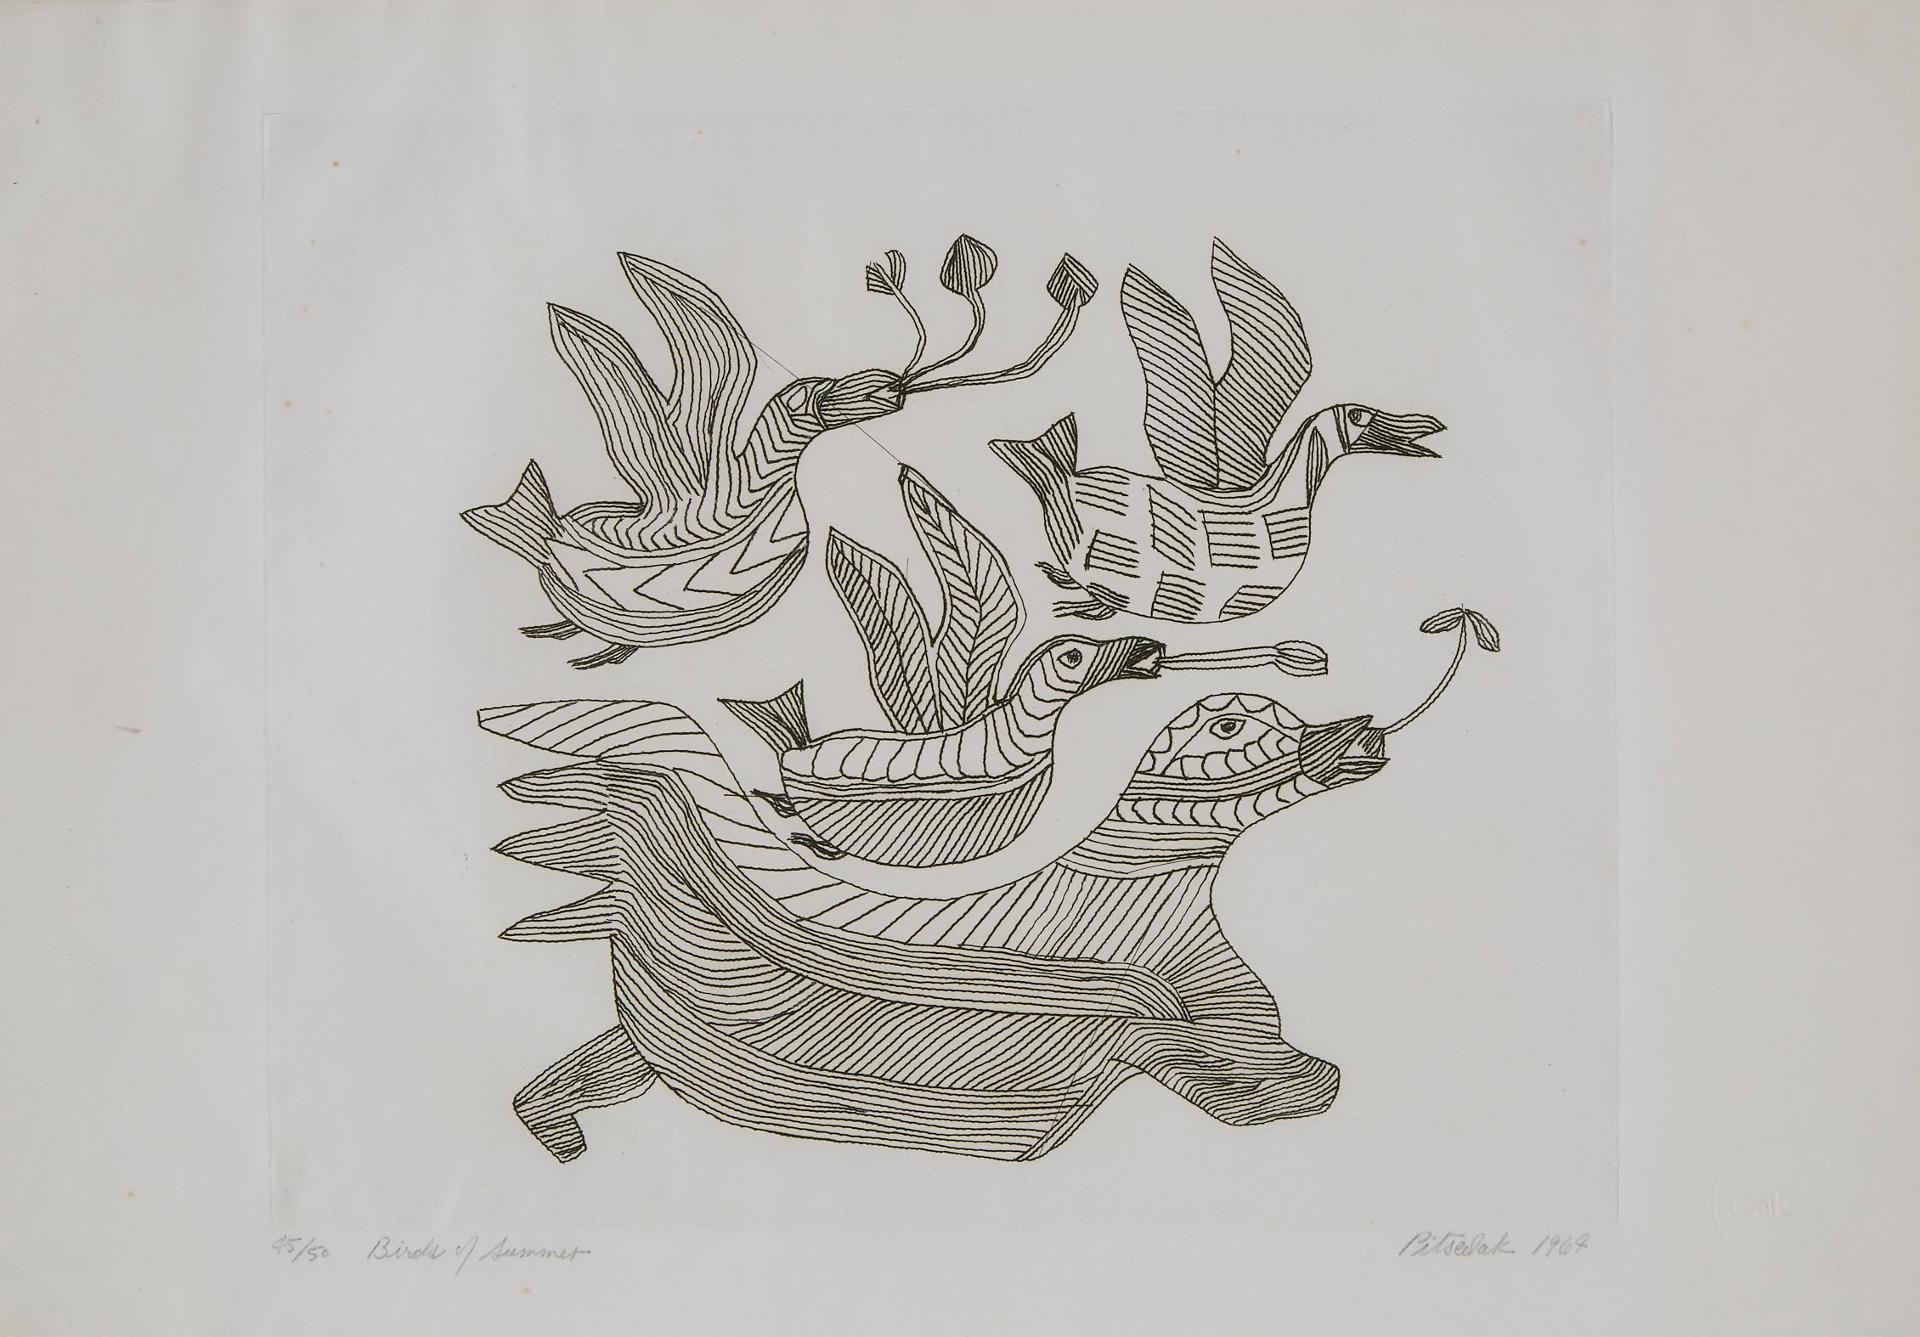 Pitseolak Ashoona (1904-1983) - Birds Of Summer